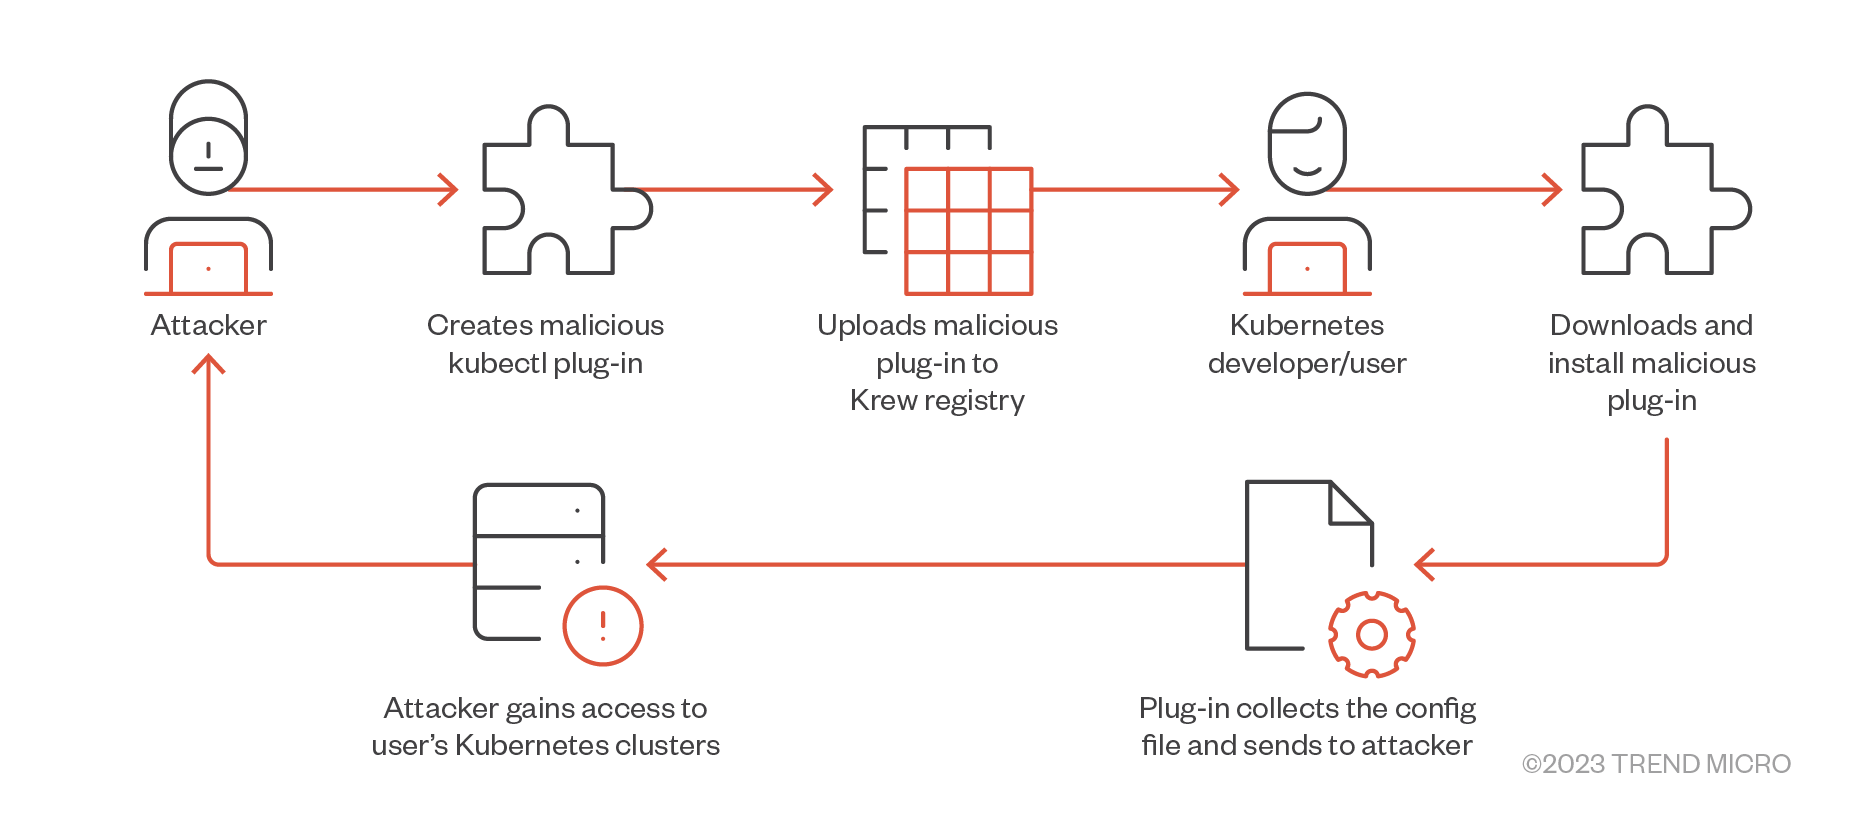 Figure 3.  Threat model scenario of sending a malicious plug-in to Krew